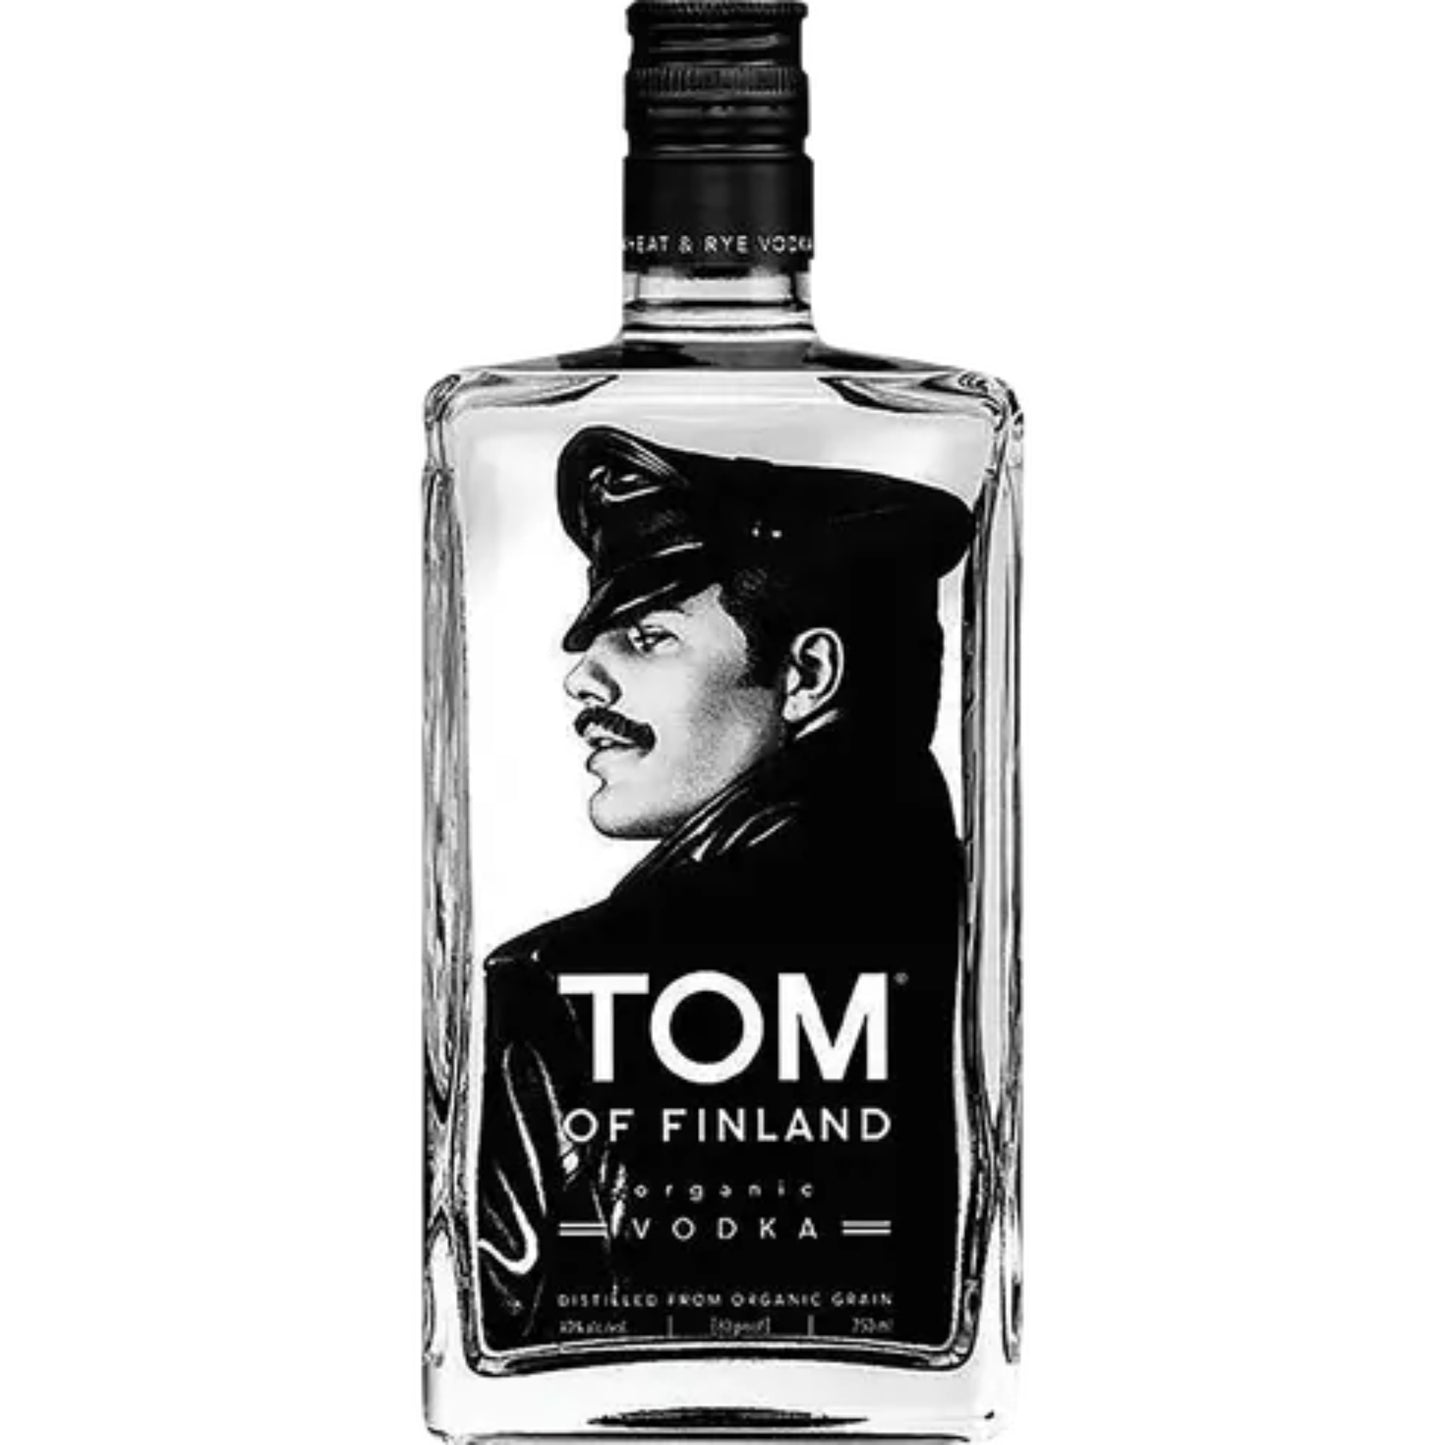 Tom of Finland Vodka - Liquor Geeks